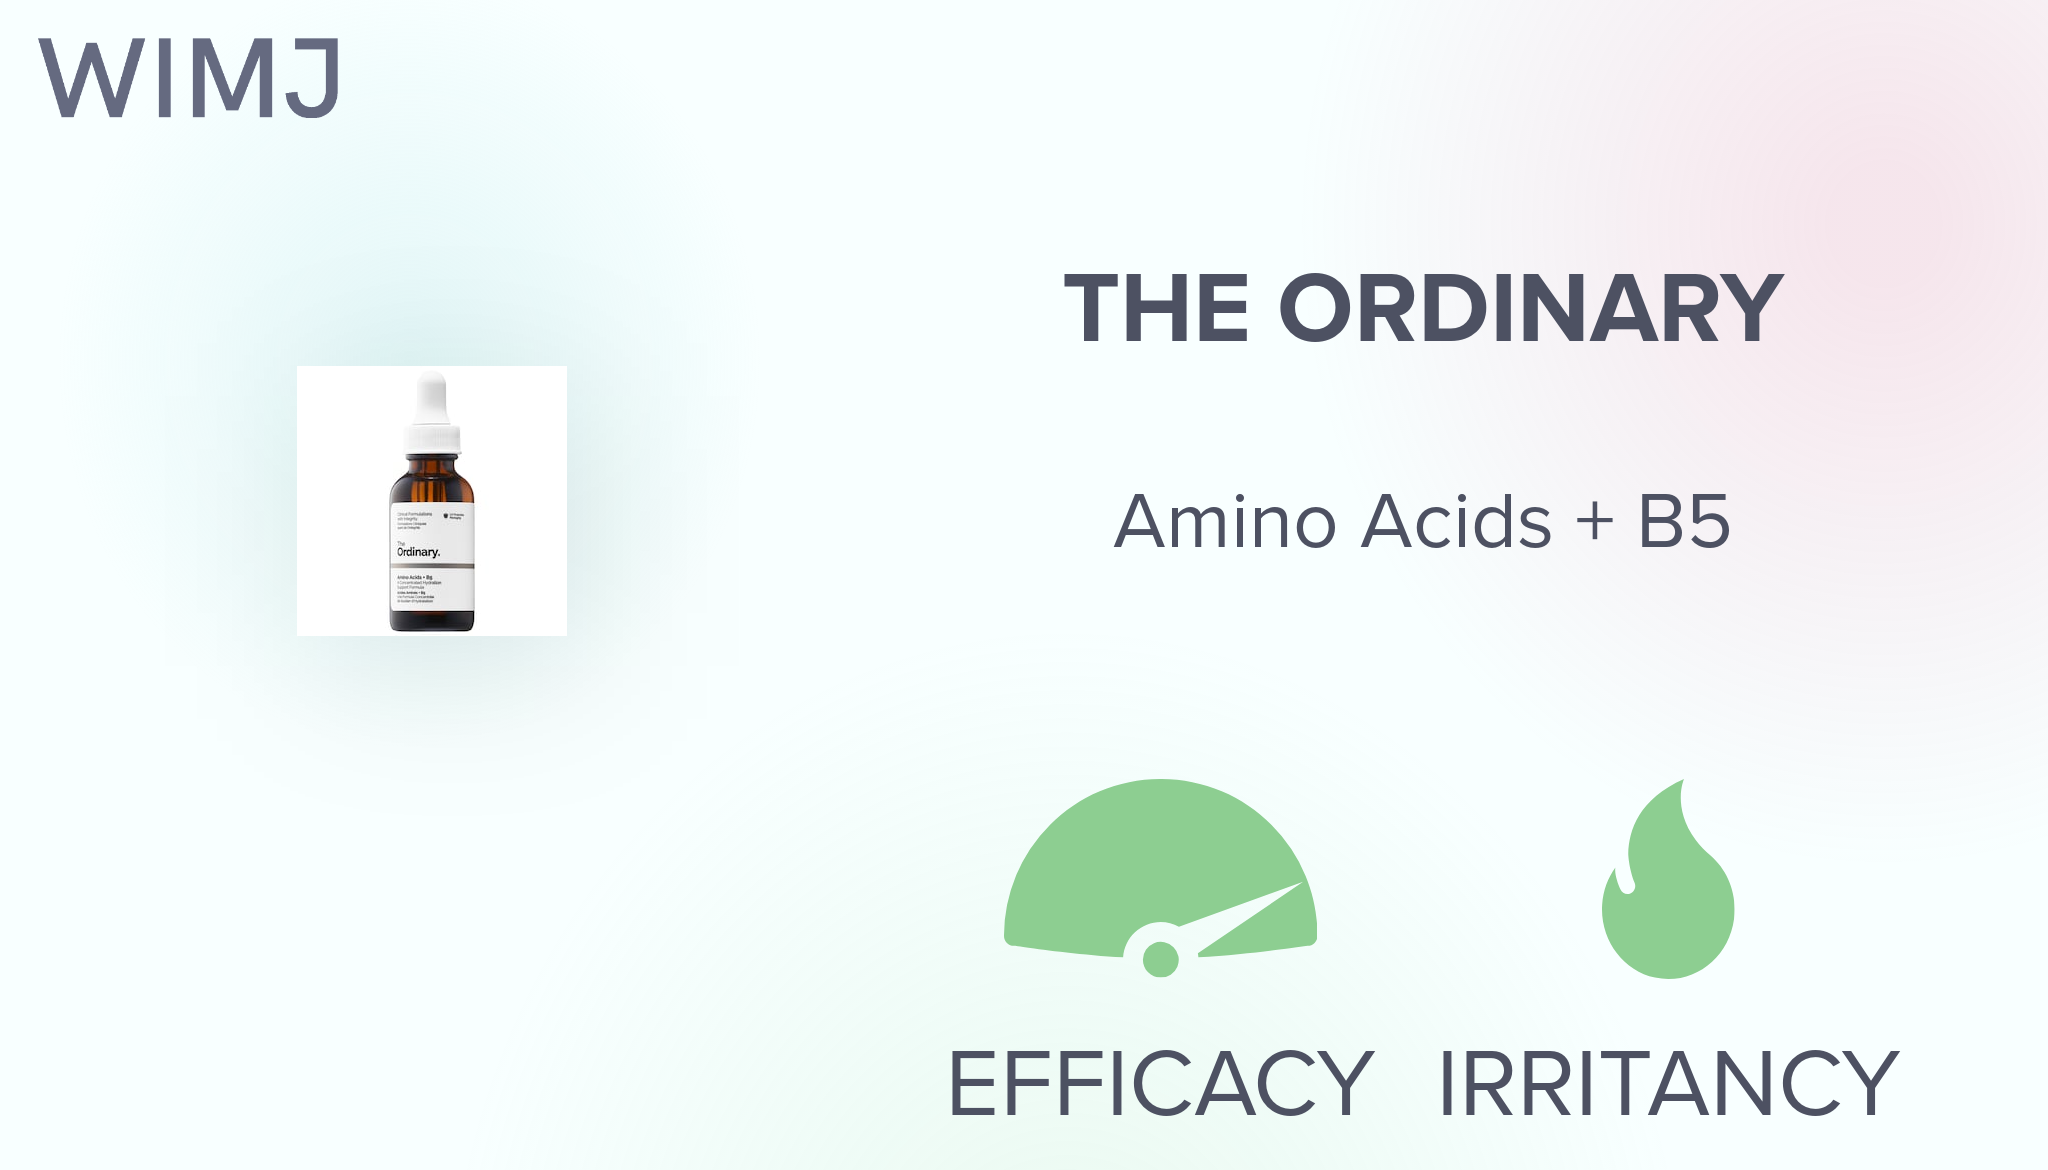 Review: The Ordinary - Amino Acids + B5